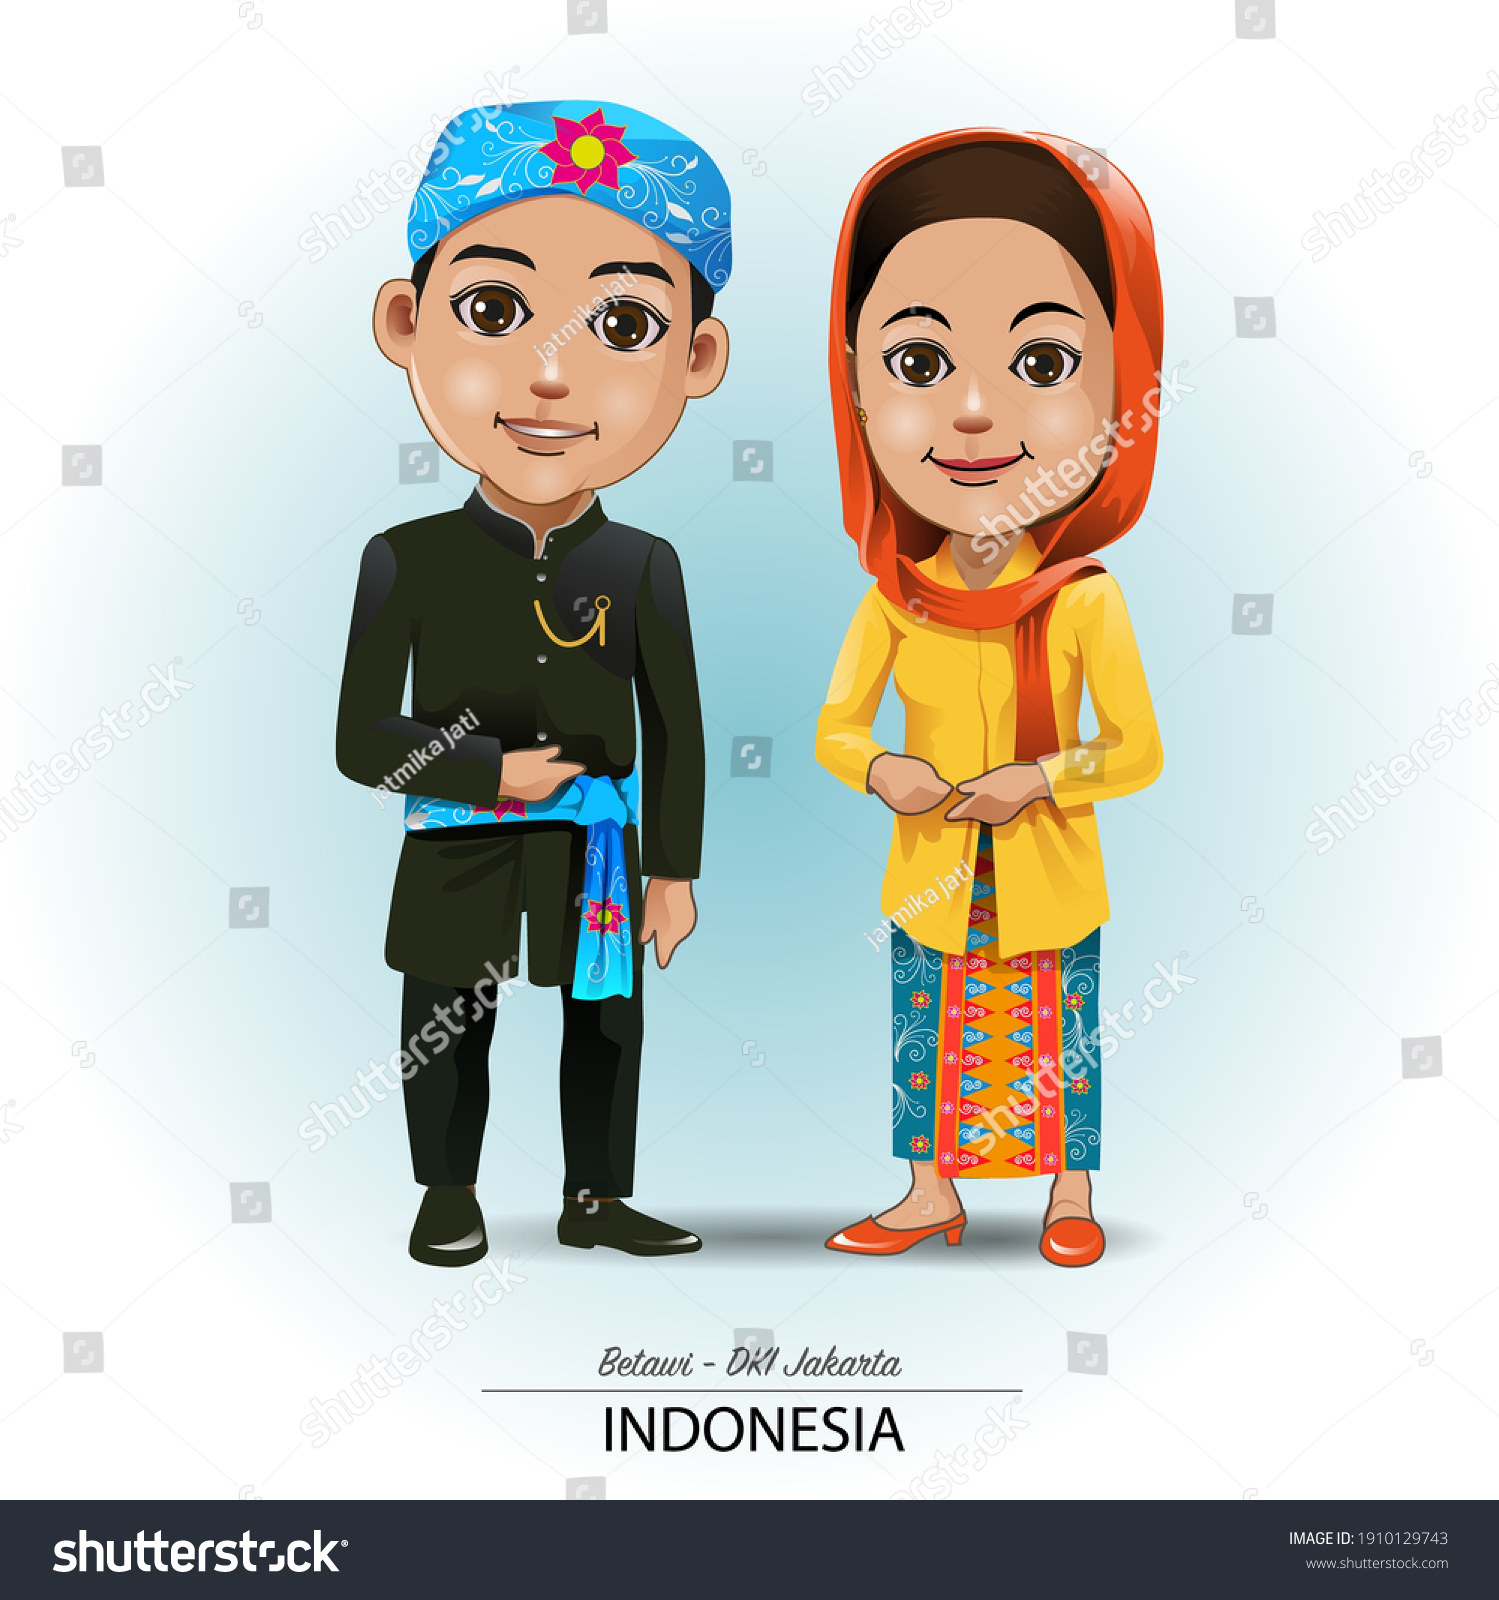 SVG of Vector illustration, Betawi traditional cloth, DKI Jakarta. svg